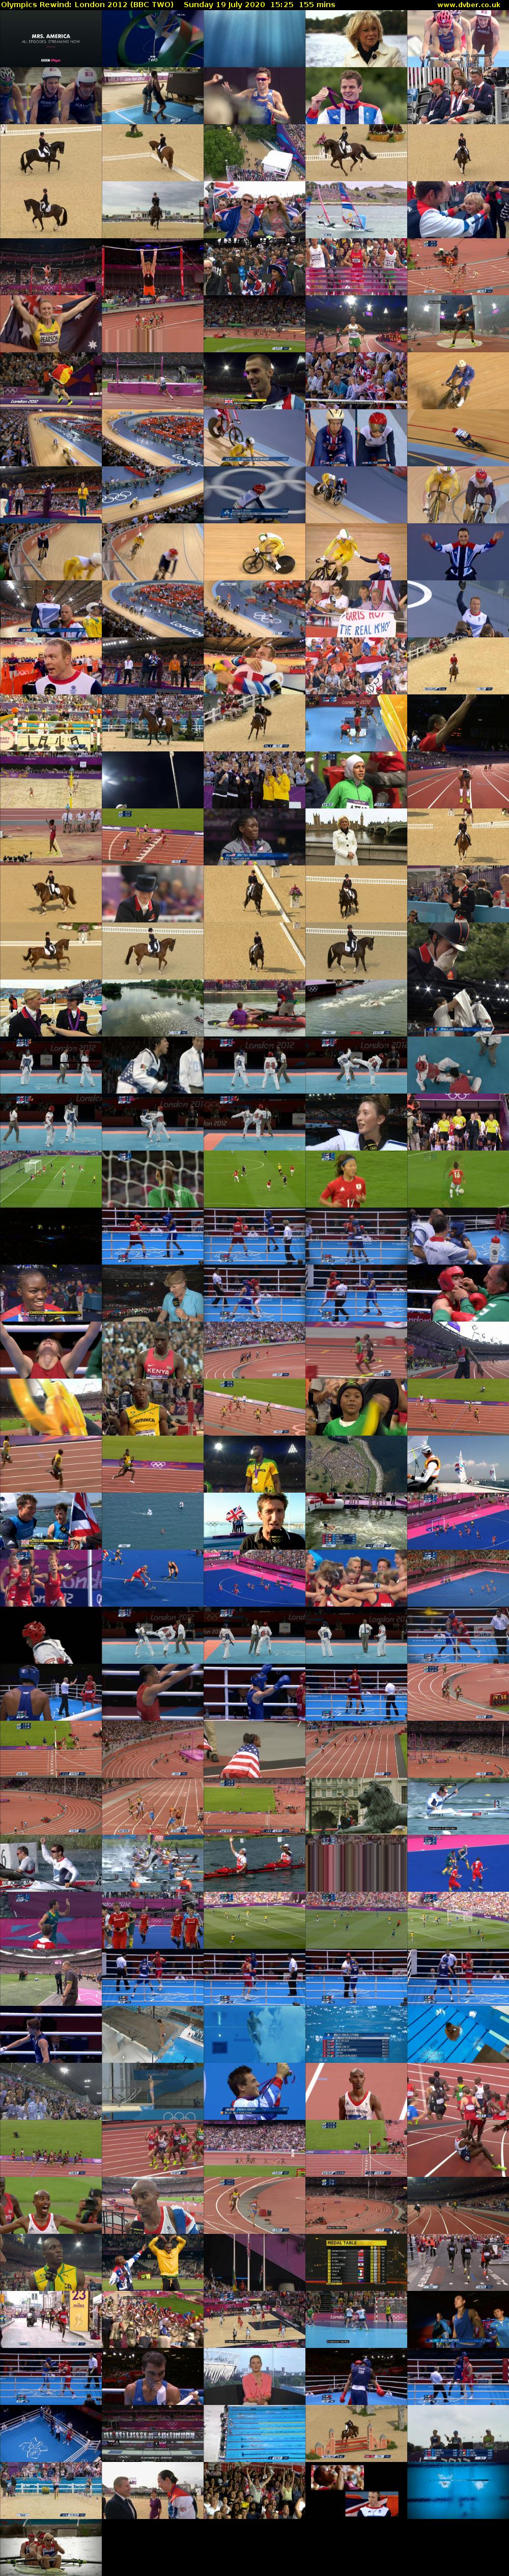 Olympics Rewind: London 2012 (BBC TWO) Sunday 19 July 2020 15:25 - 18:00